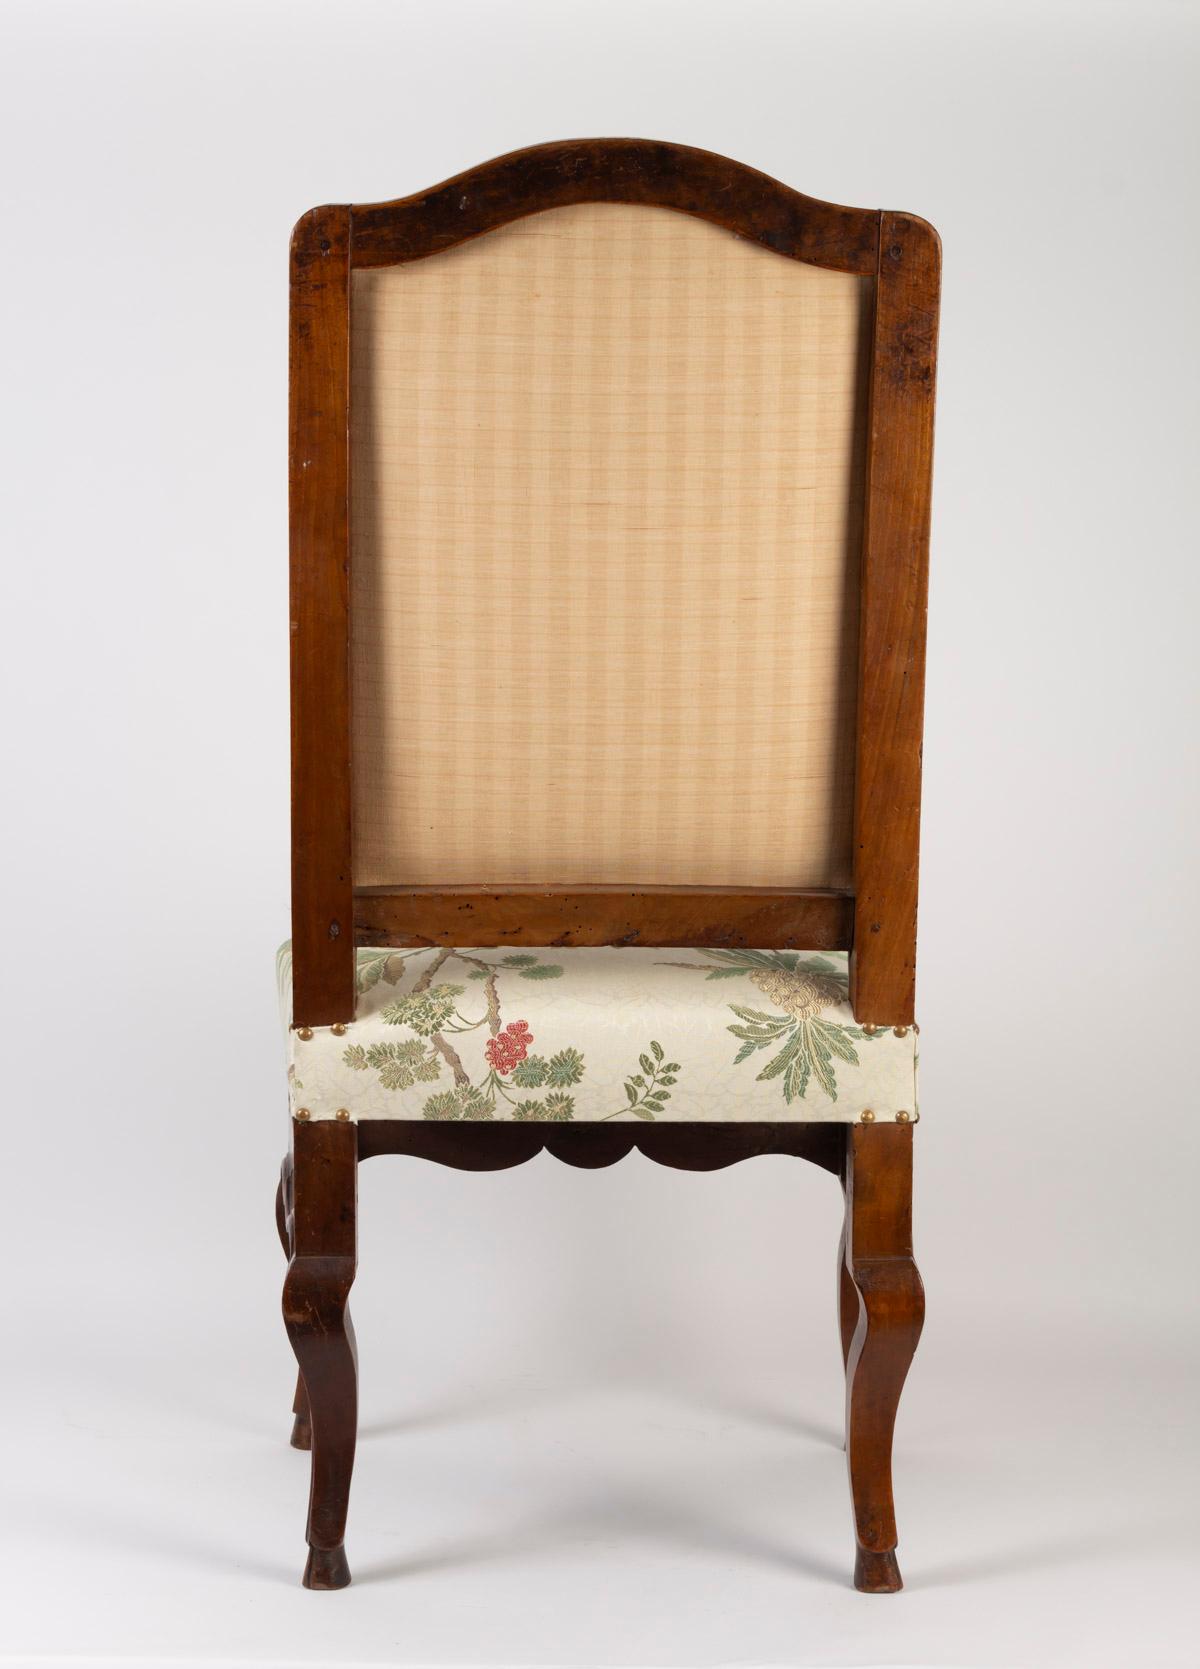 Pair of Walnut Provençal Chairs, 18th Century Period 1